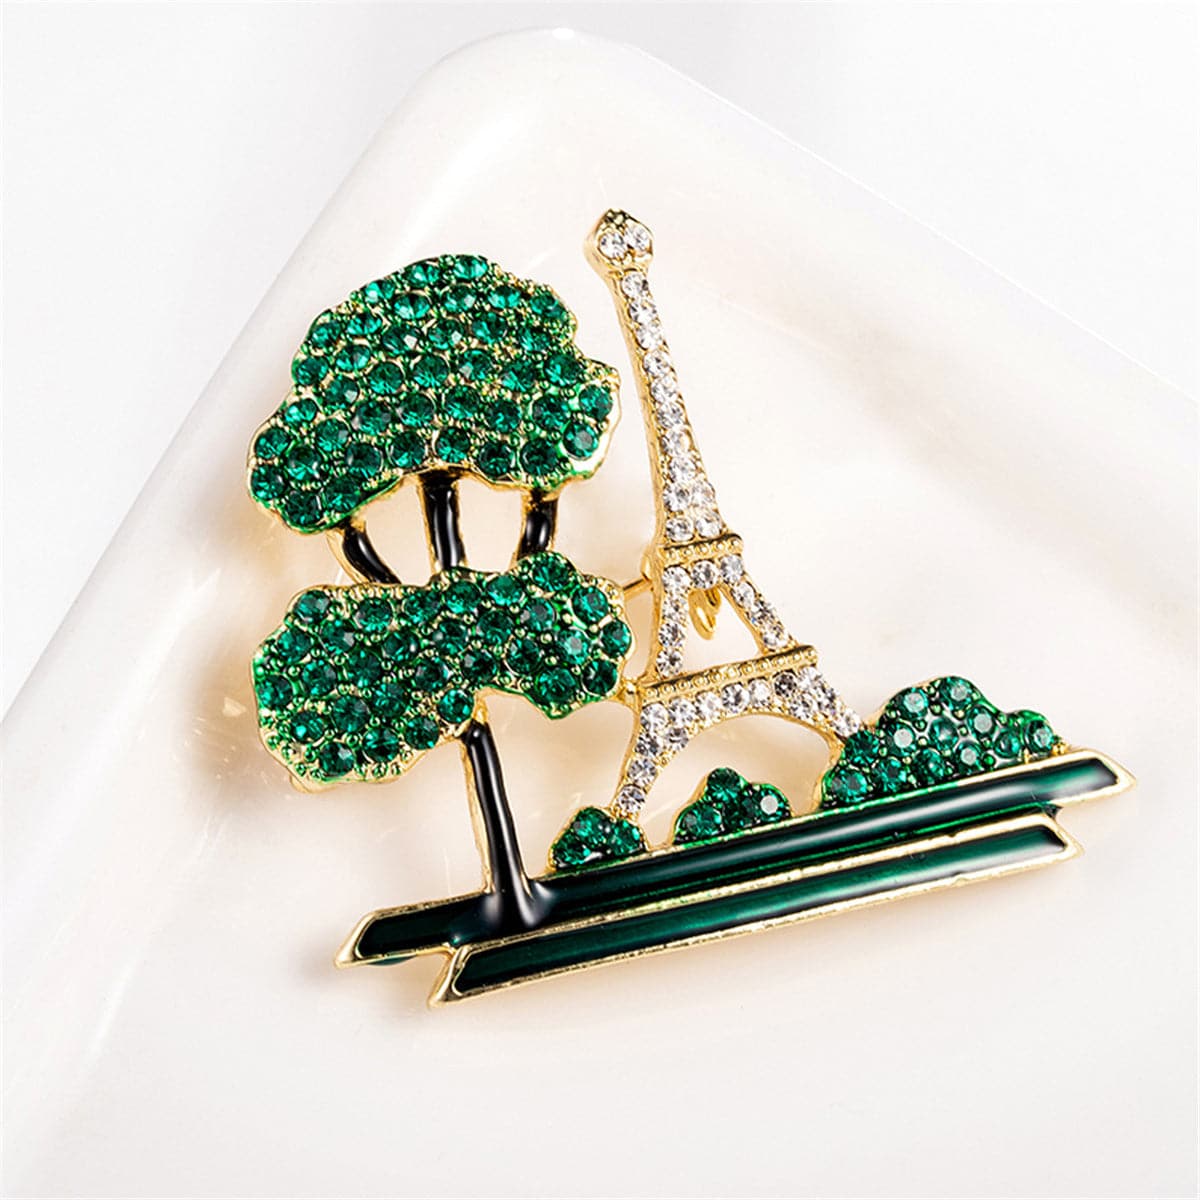 Green Cubic Zirconia & 18K Gold-Plated Eiffel Tower Brooch